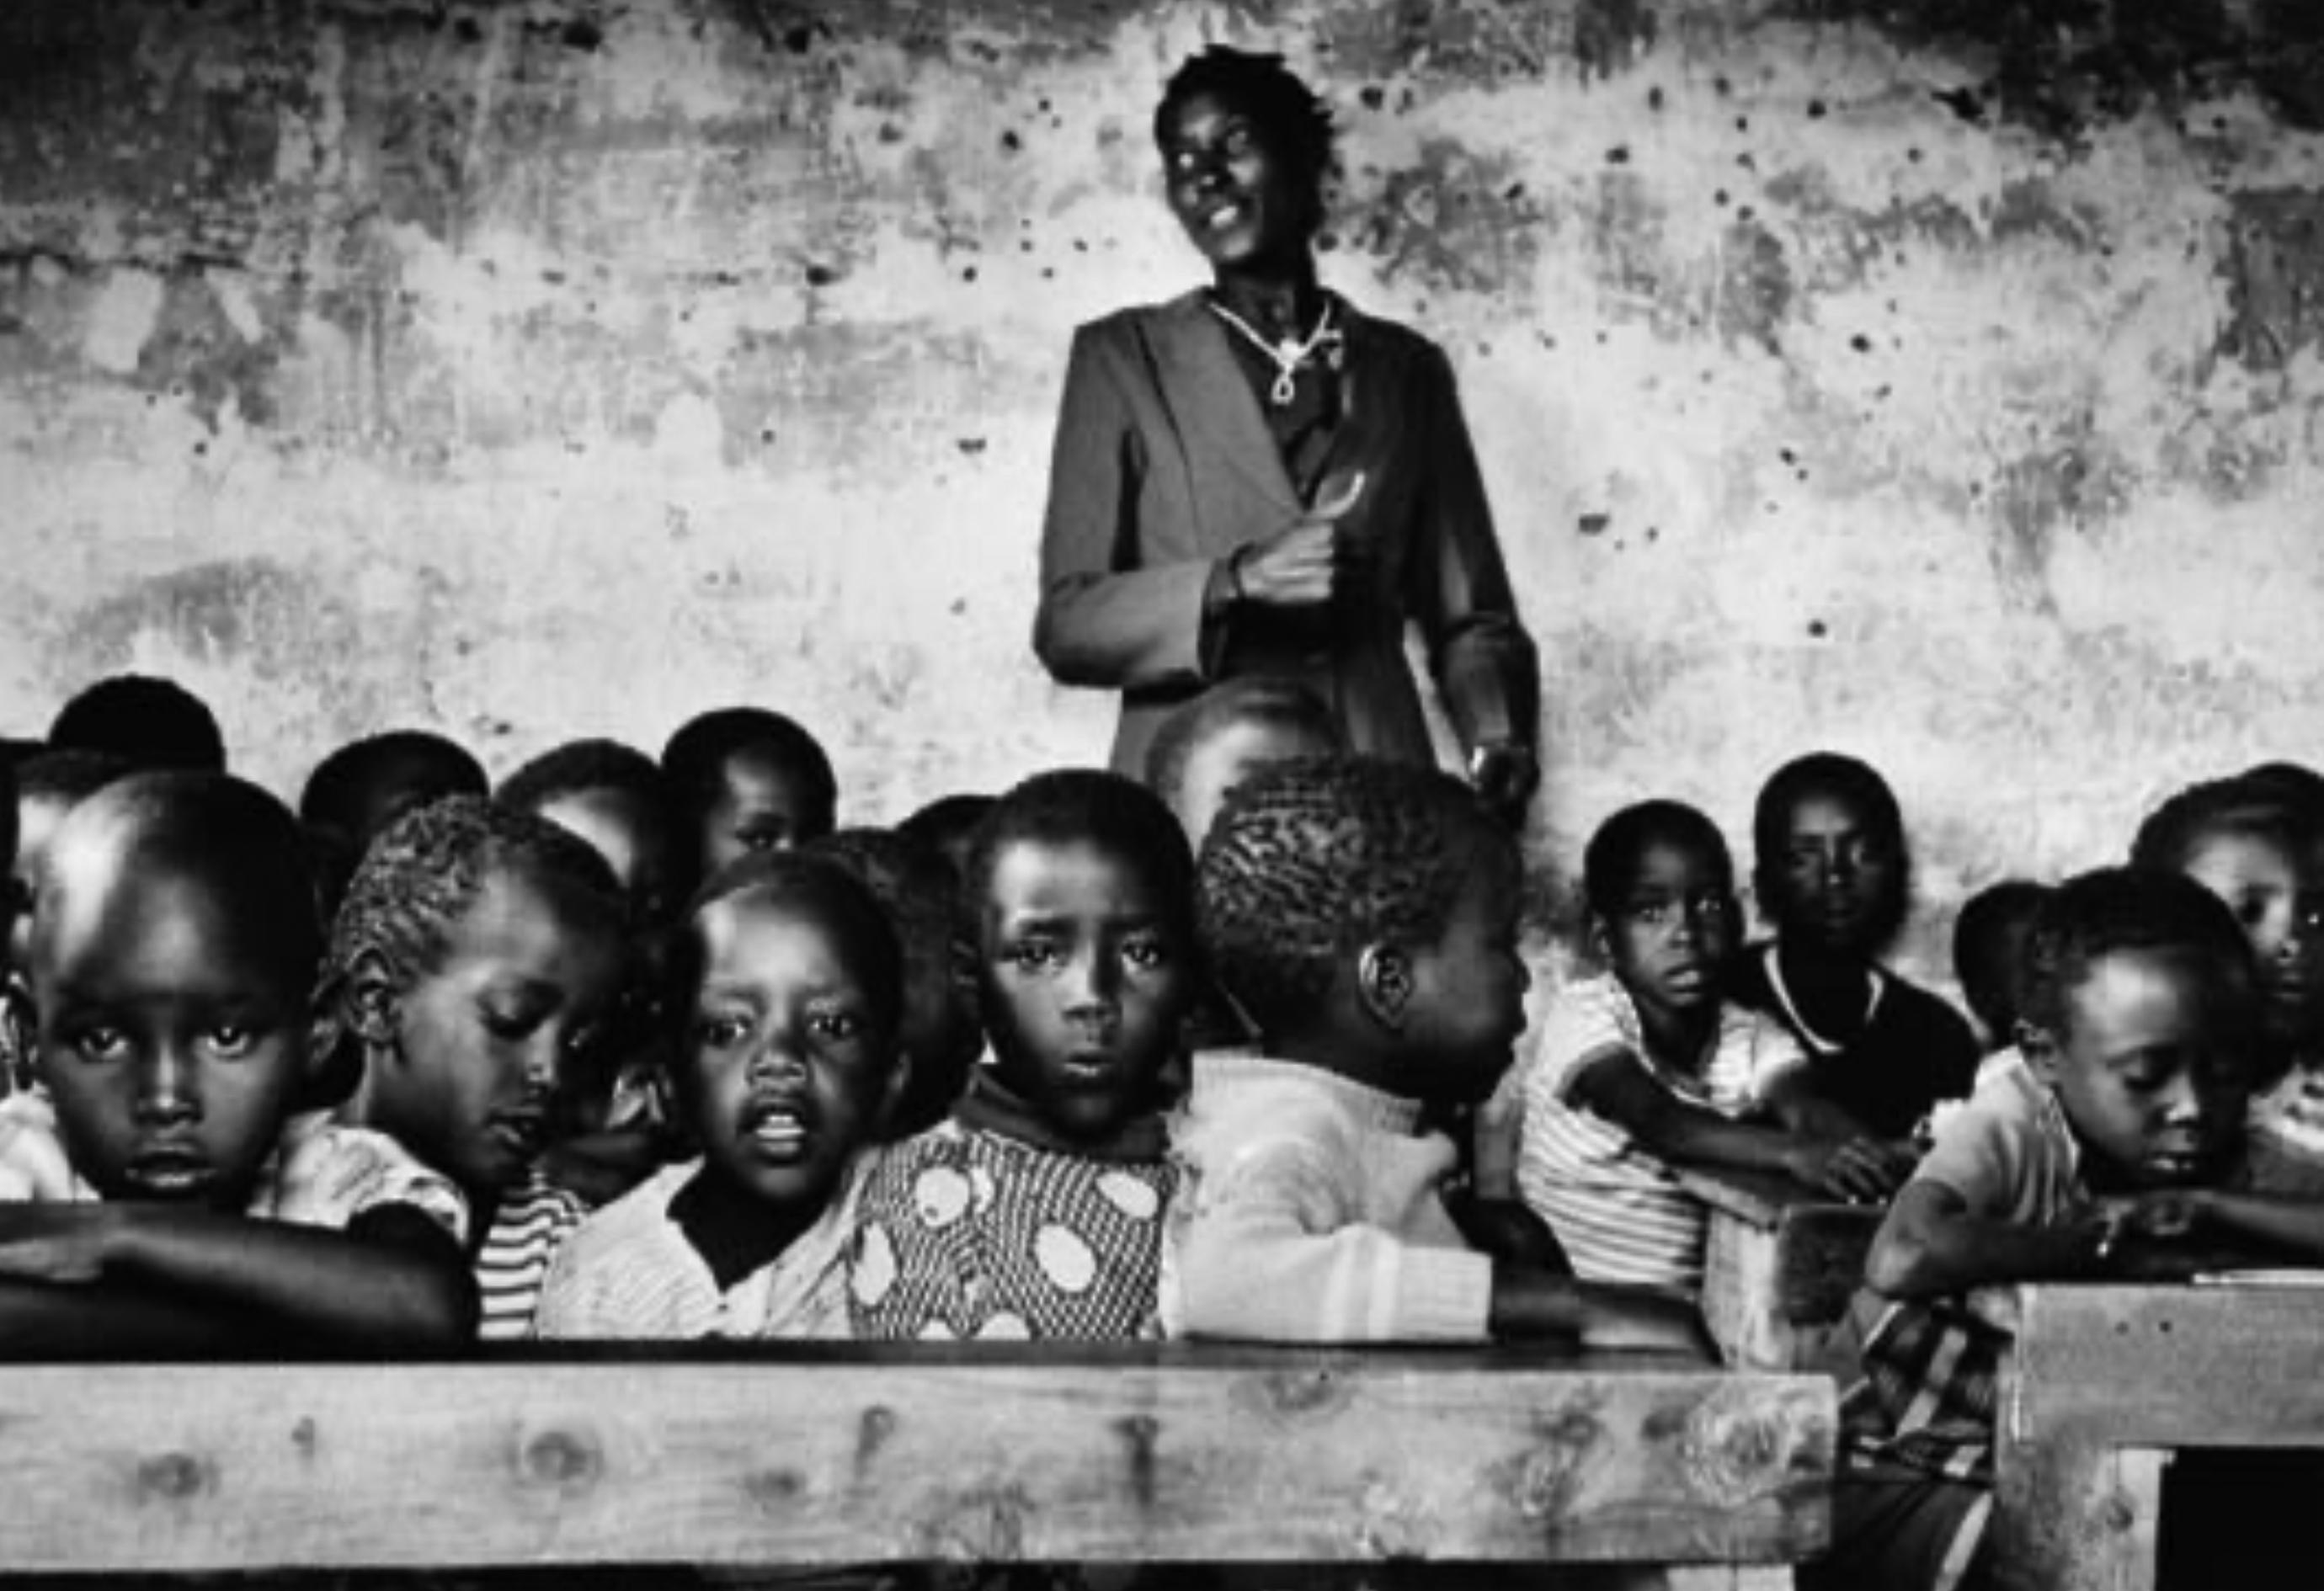 Sebastião Salgado Black and White Photograph - School in the Lake Victoria Region, Kenya